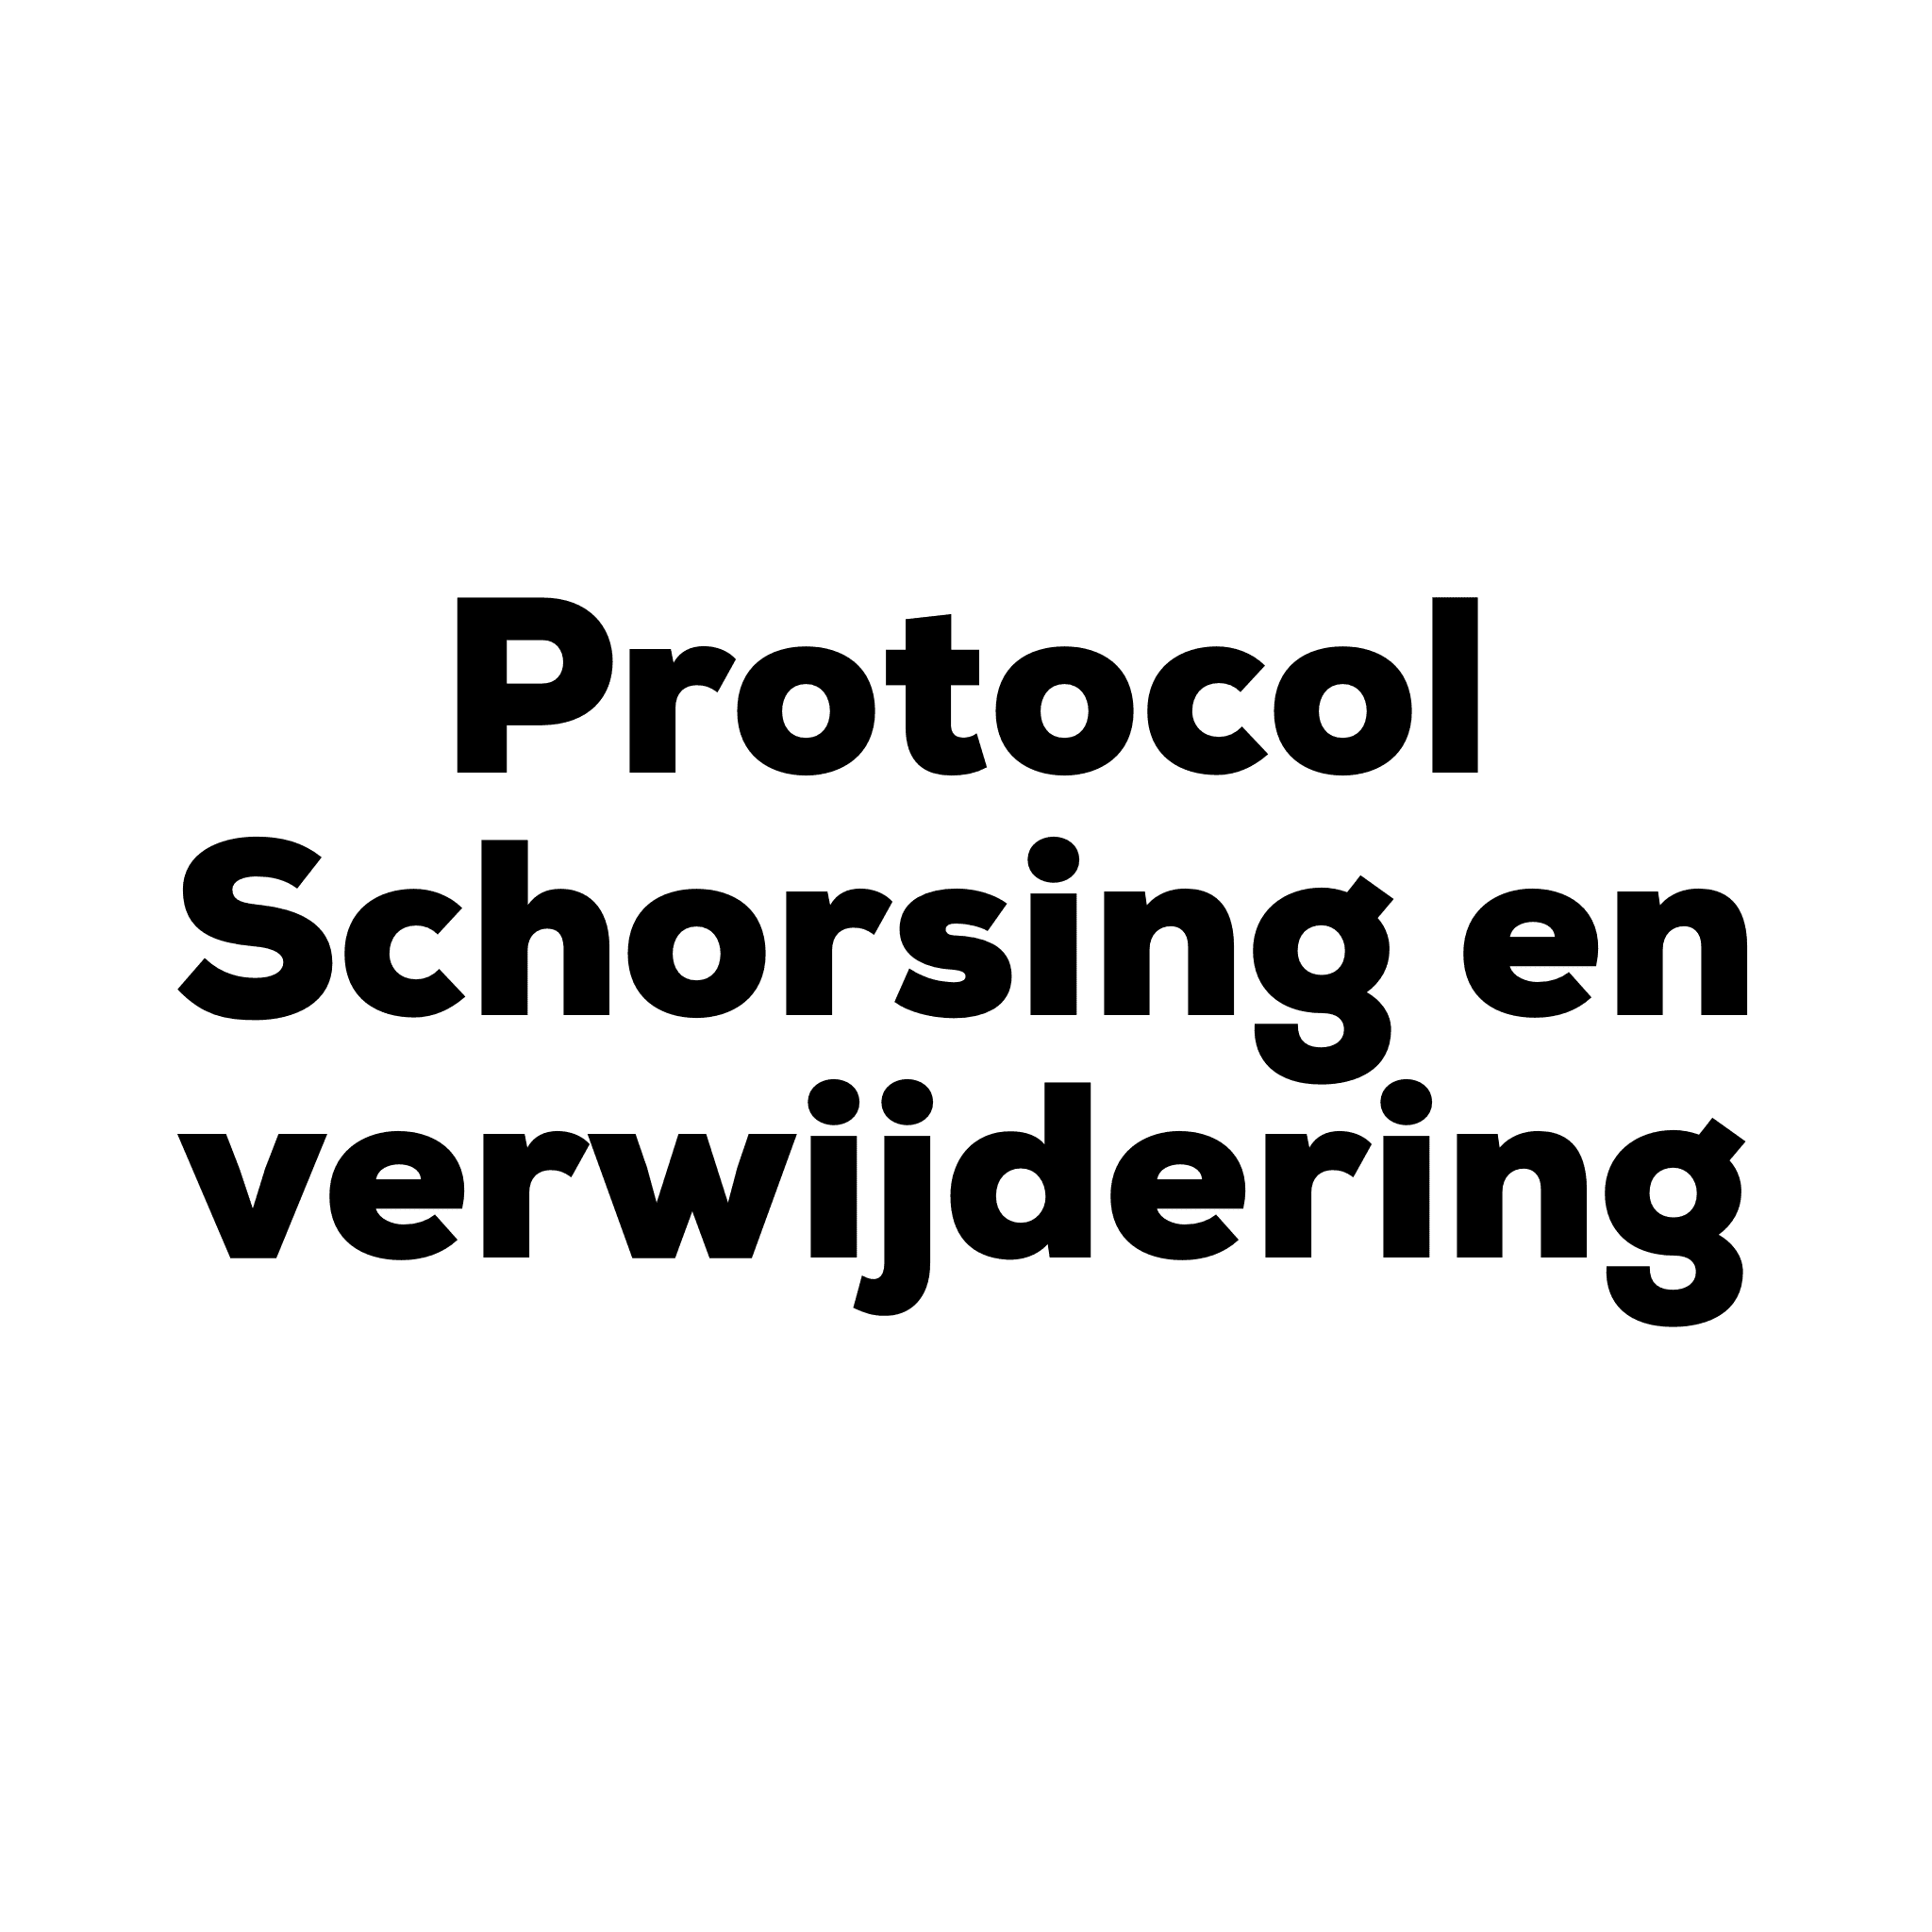 Protocol Schorsing en verwijdering